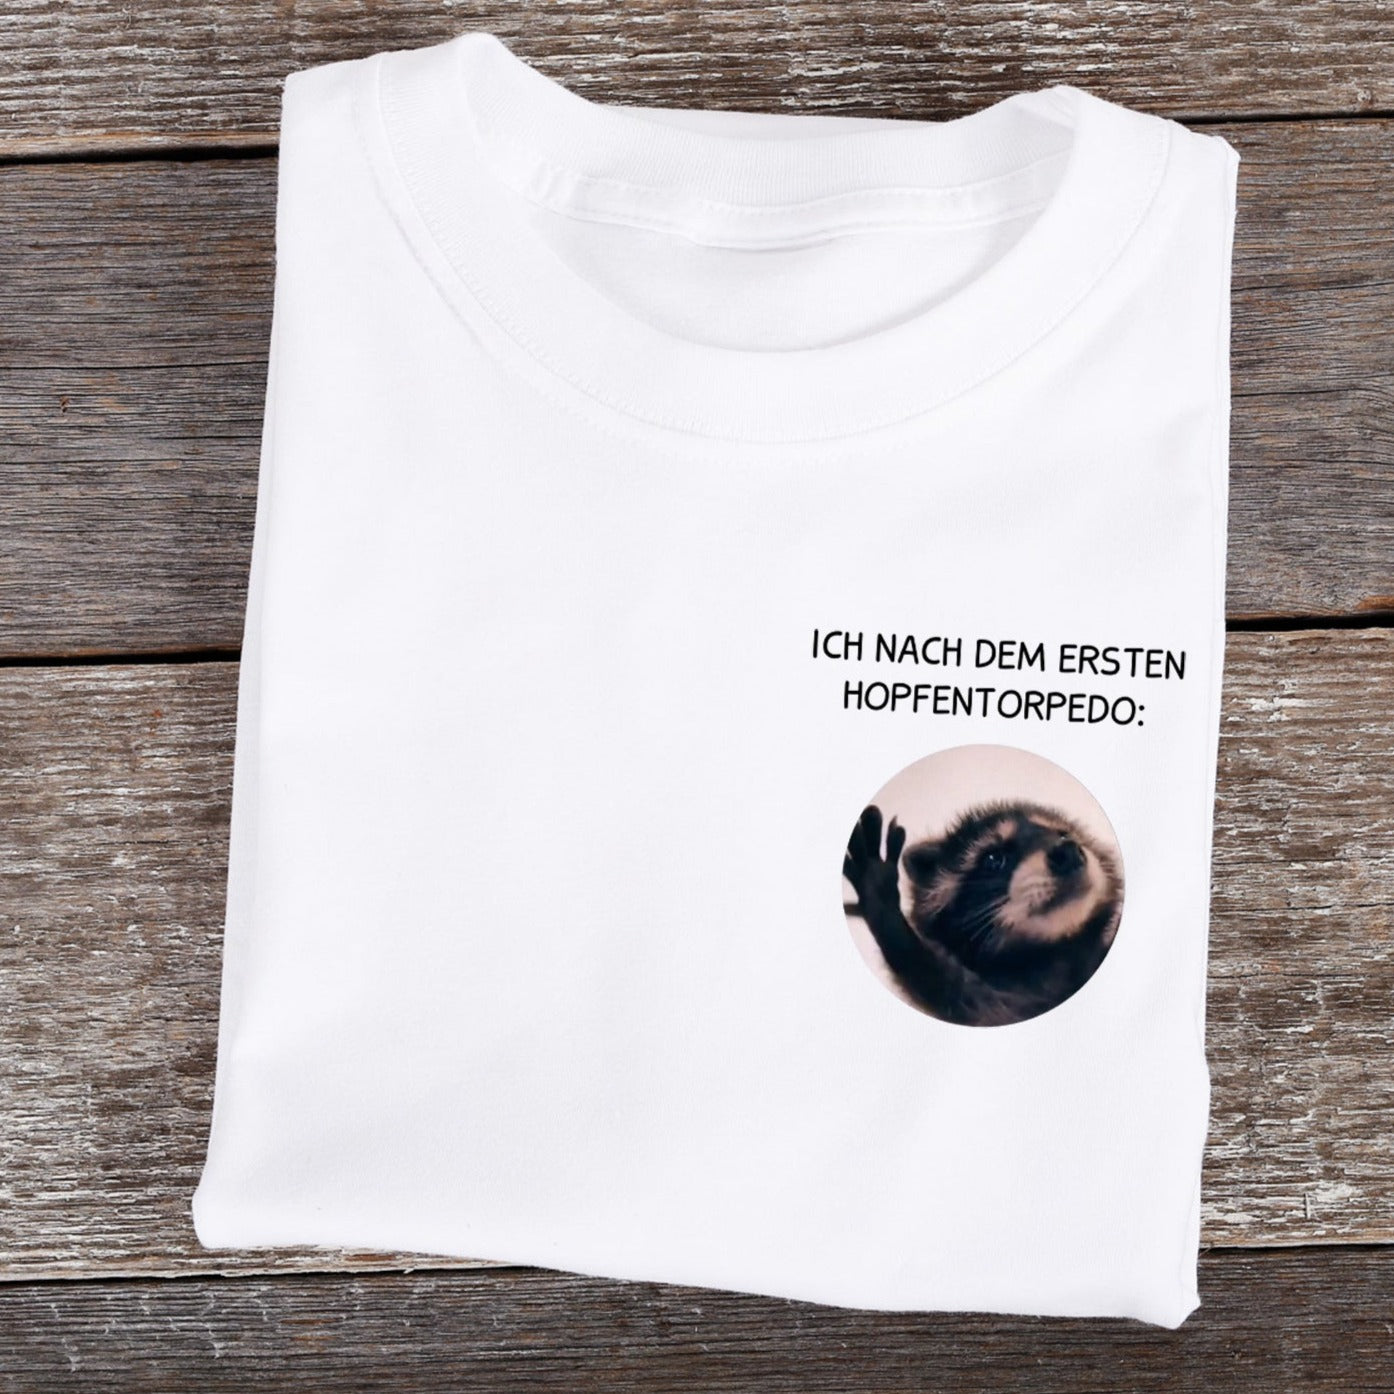 HOPFENTORPEDO LOGO - Premium Shirt